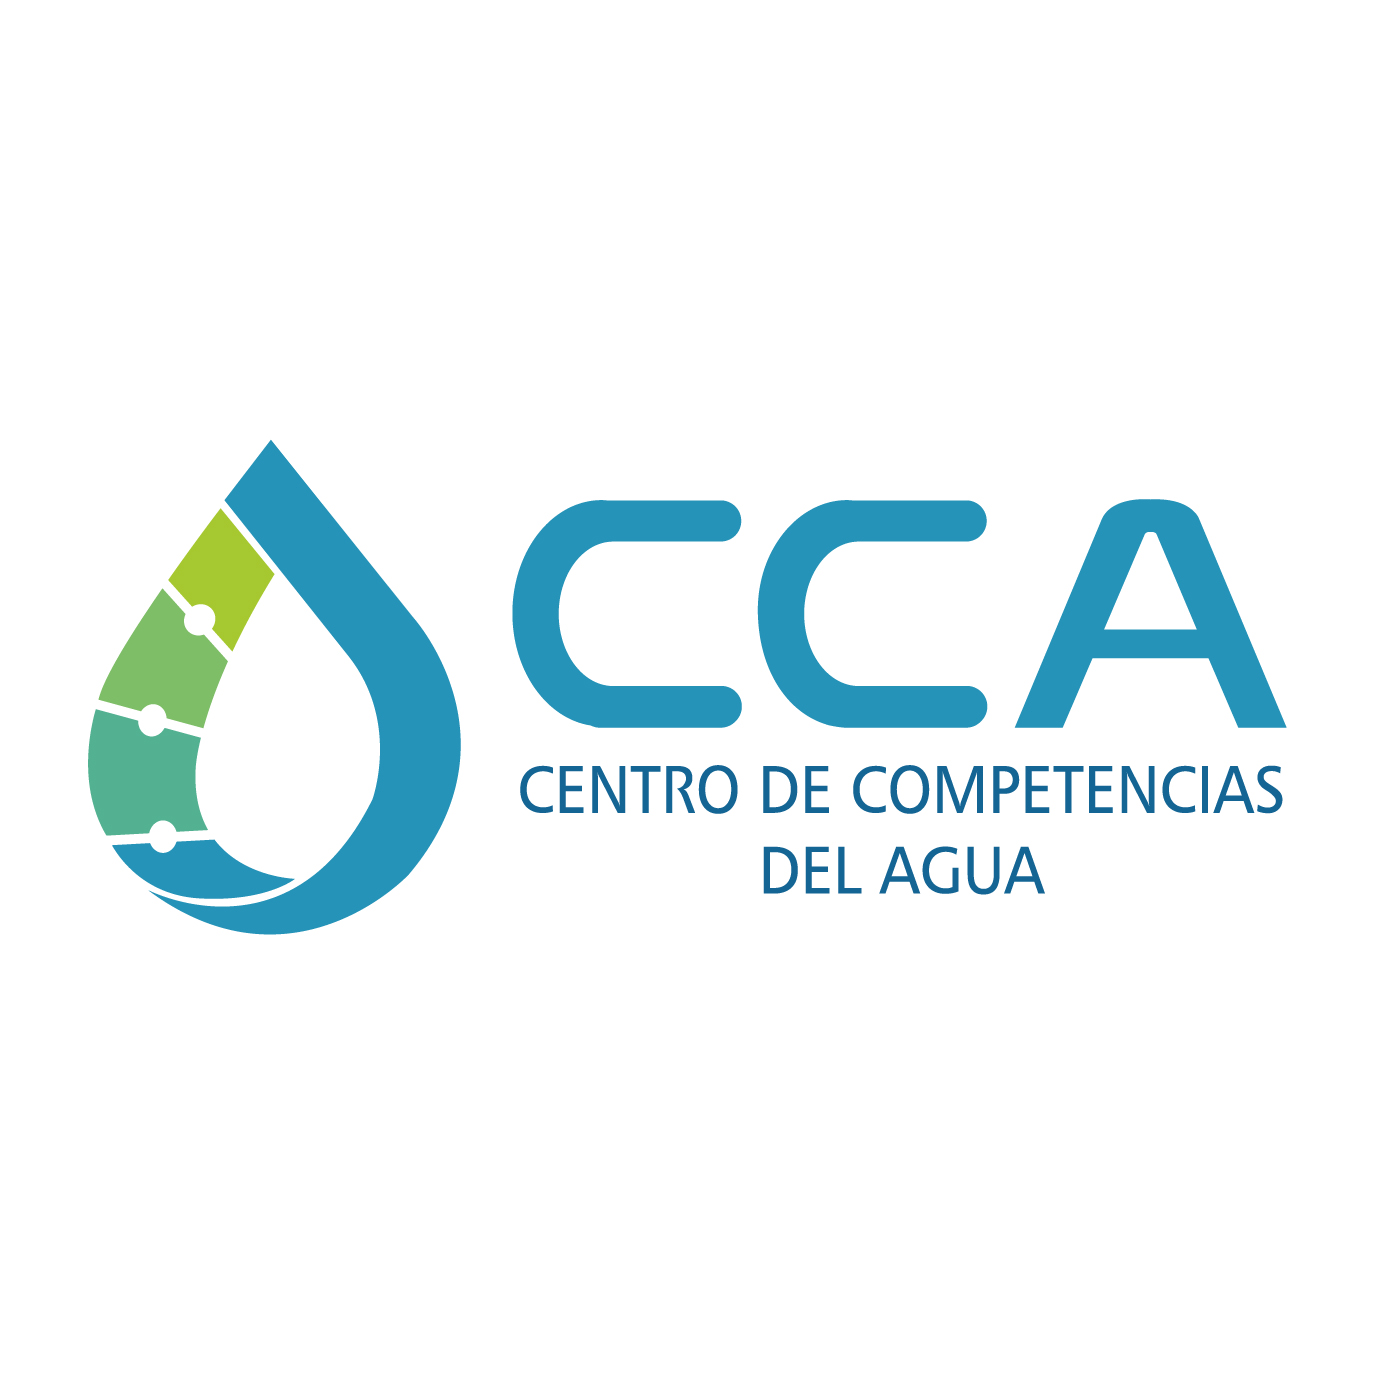 Centro de Competencias del Agua logo